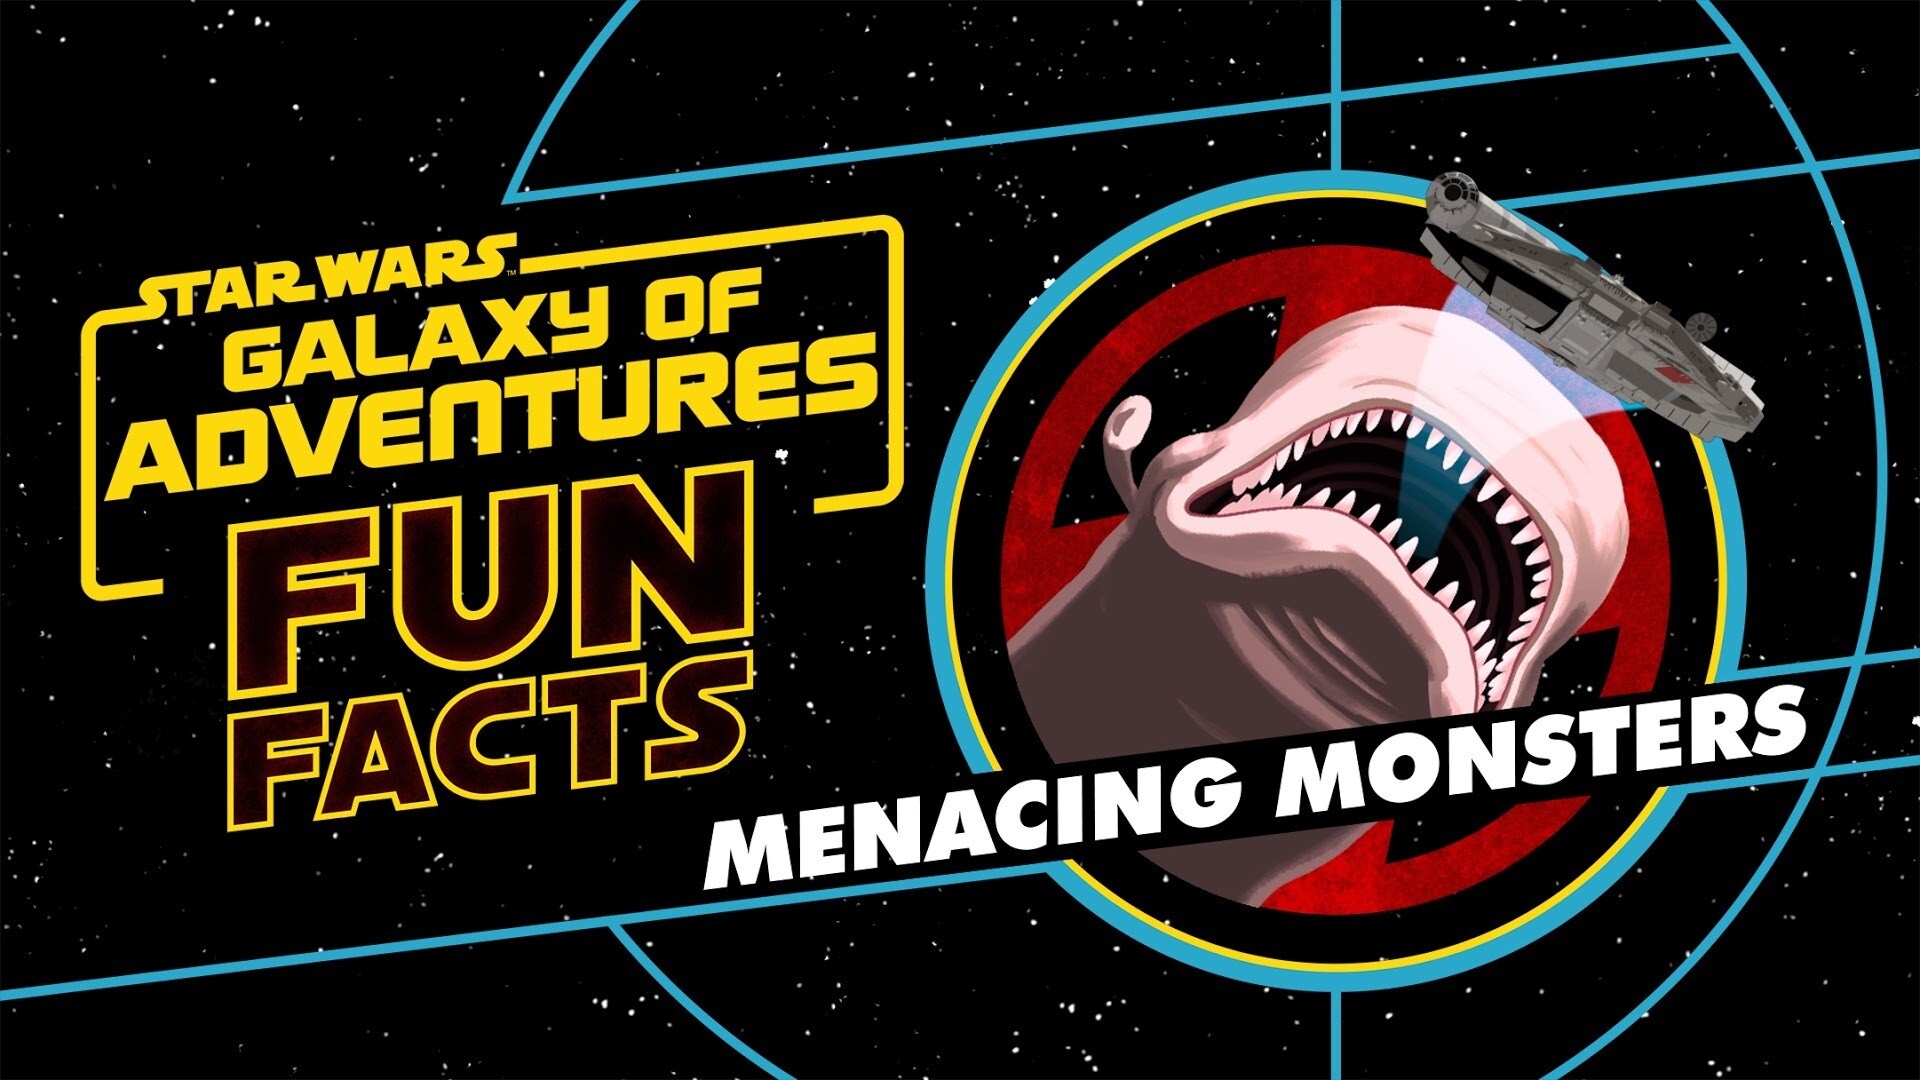 Menacing Monsters | Star Wars Galaxy of Adventures Fun Facts